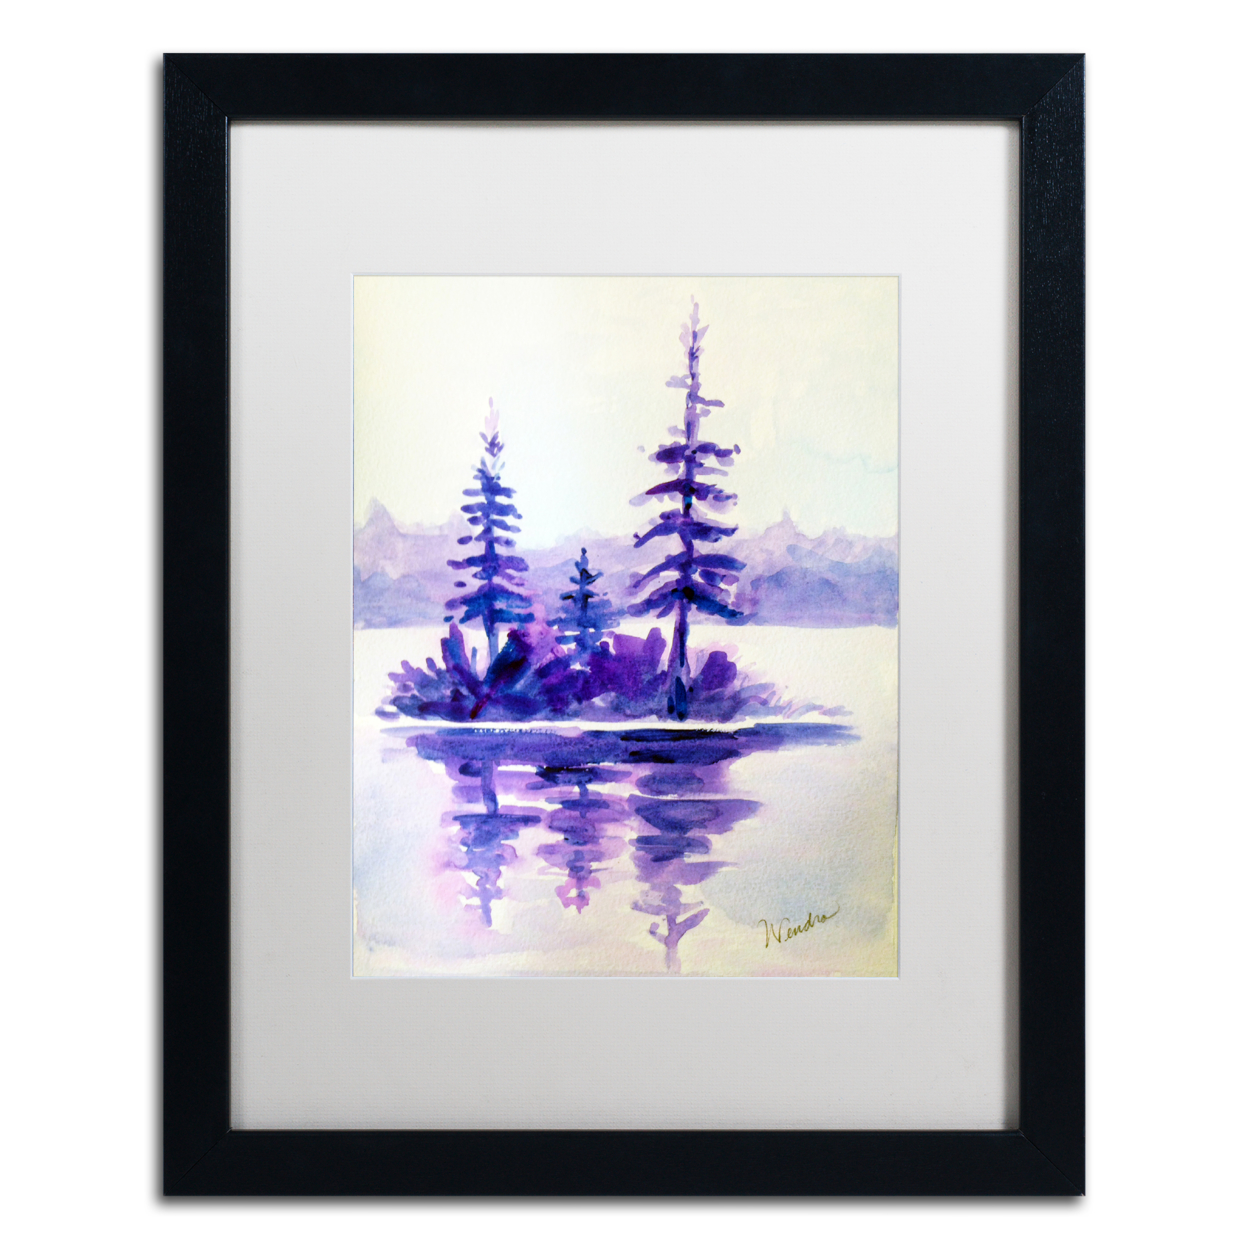 Wendra 'Purple Island' Black Wooden Framed Art 18 X 22 Inches